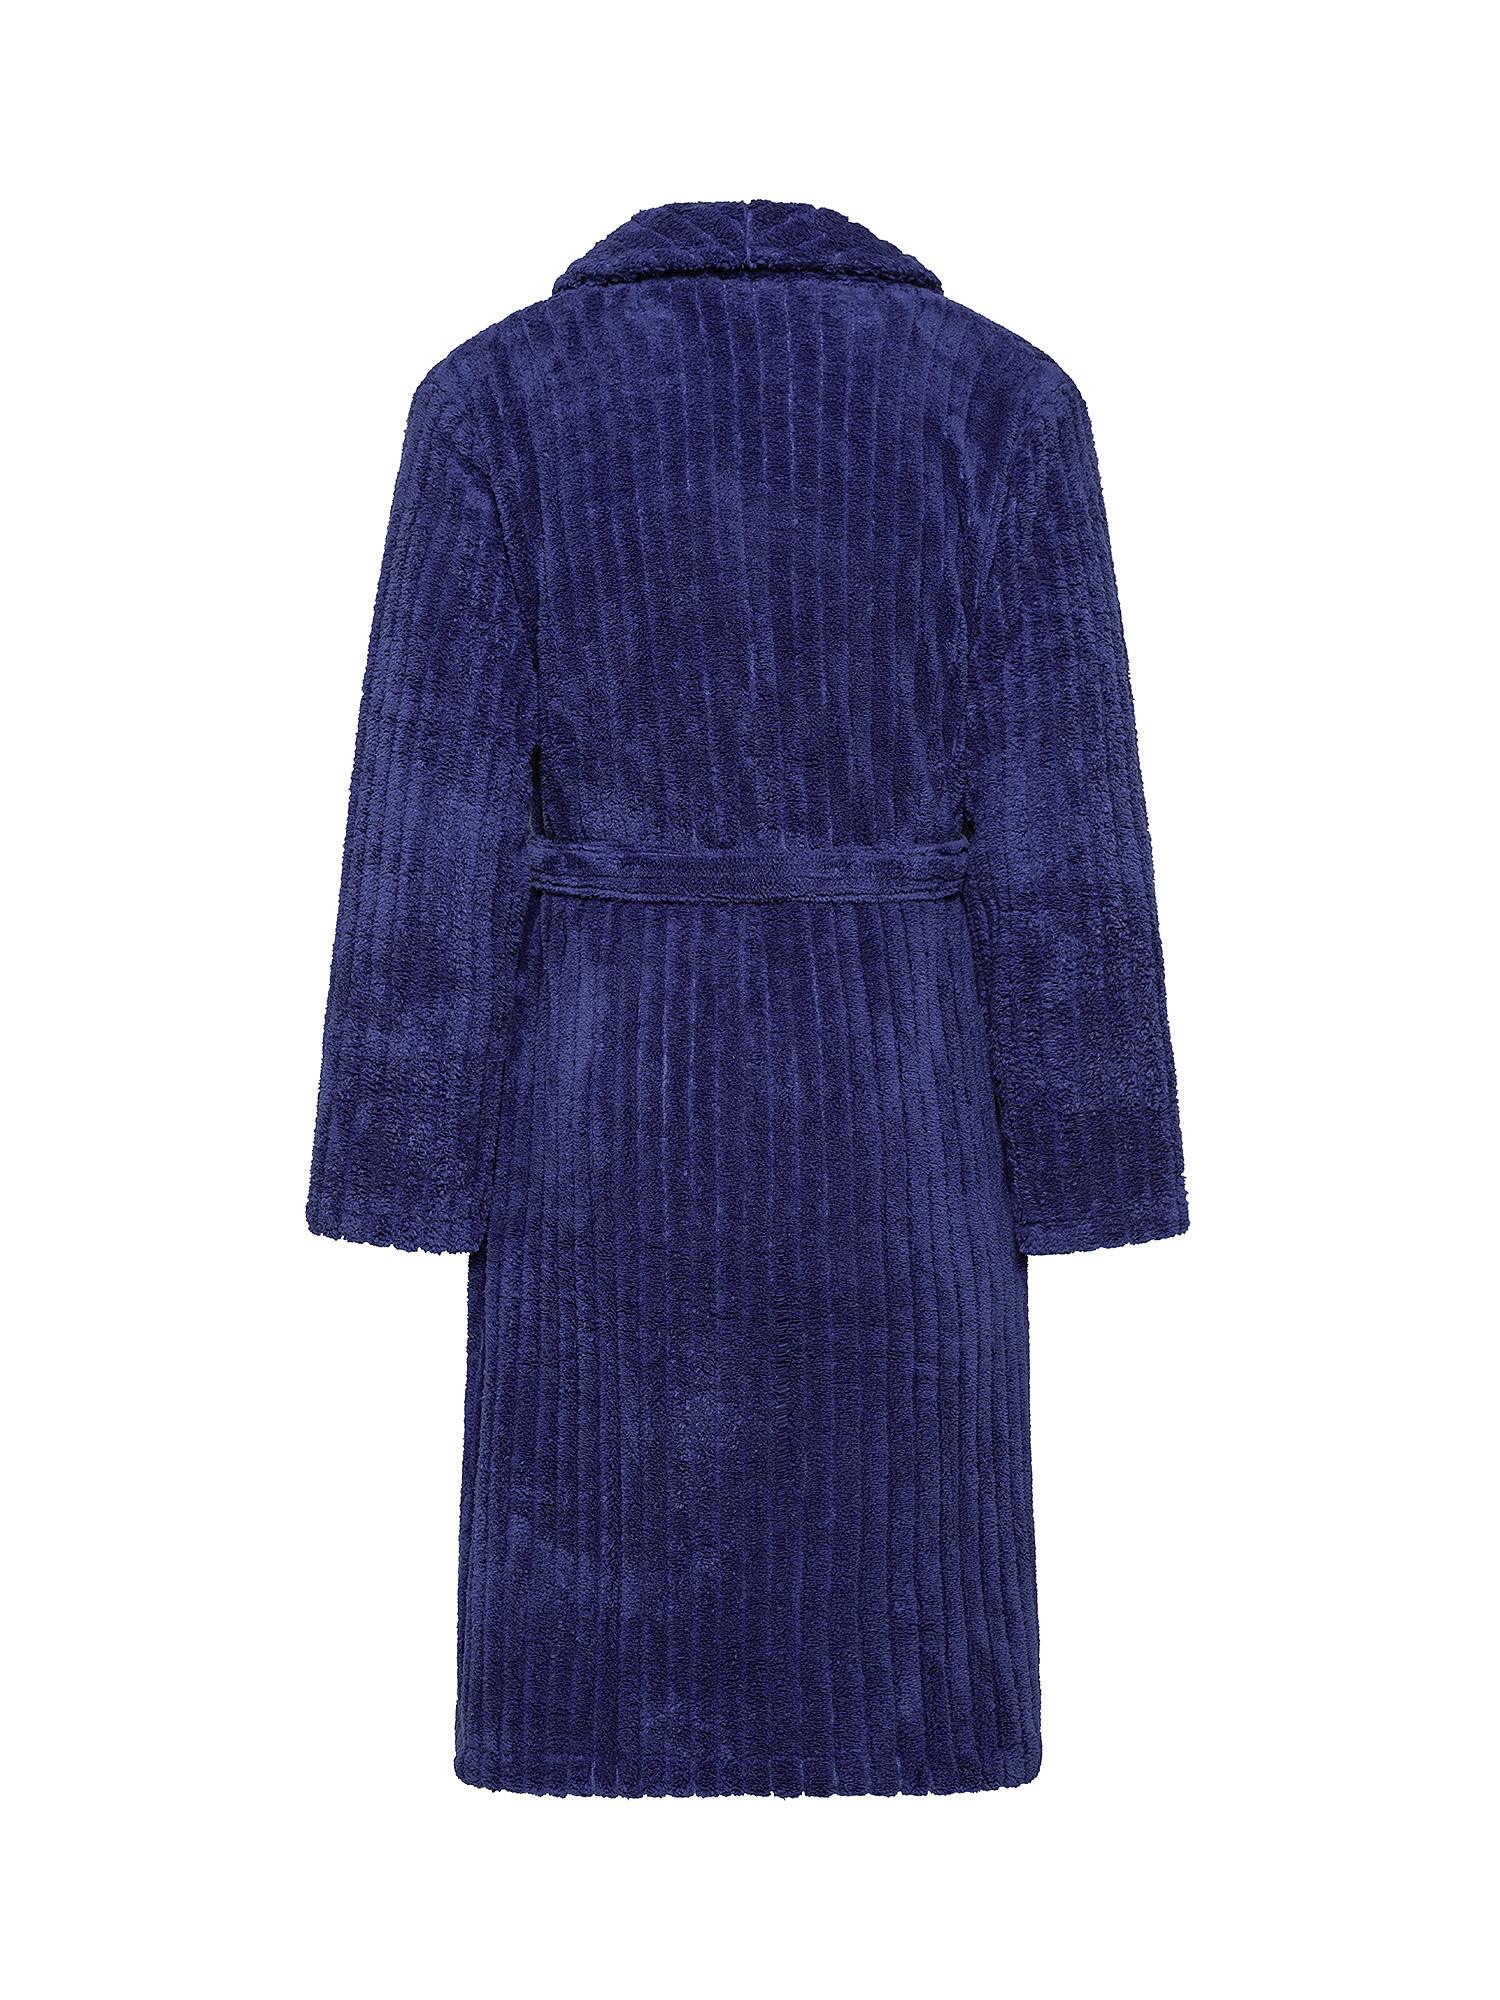 Solid color fleece dressing gown, Blue, large image number 1